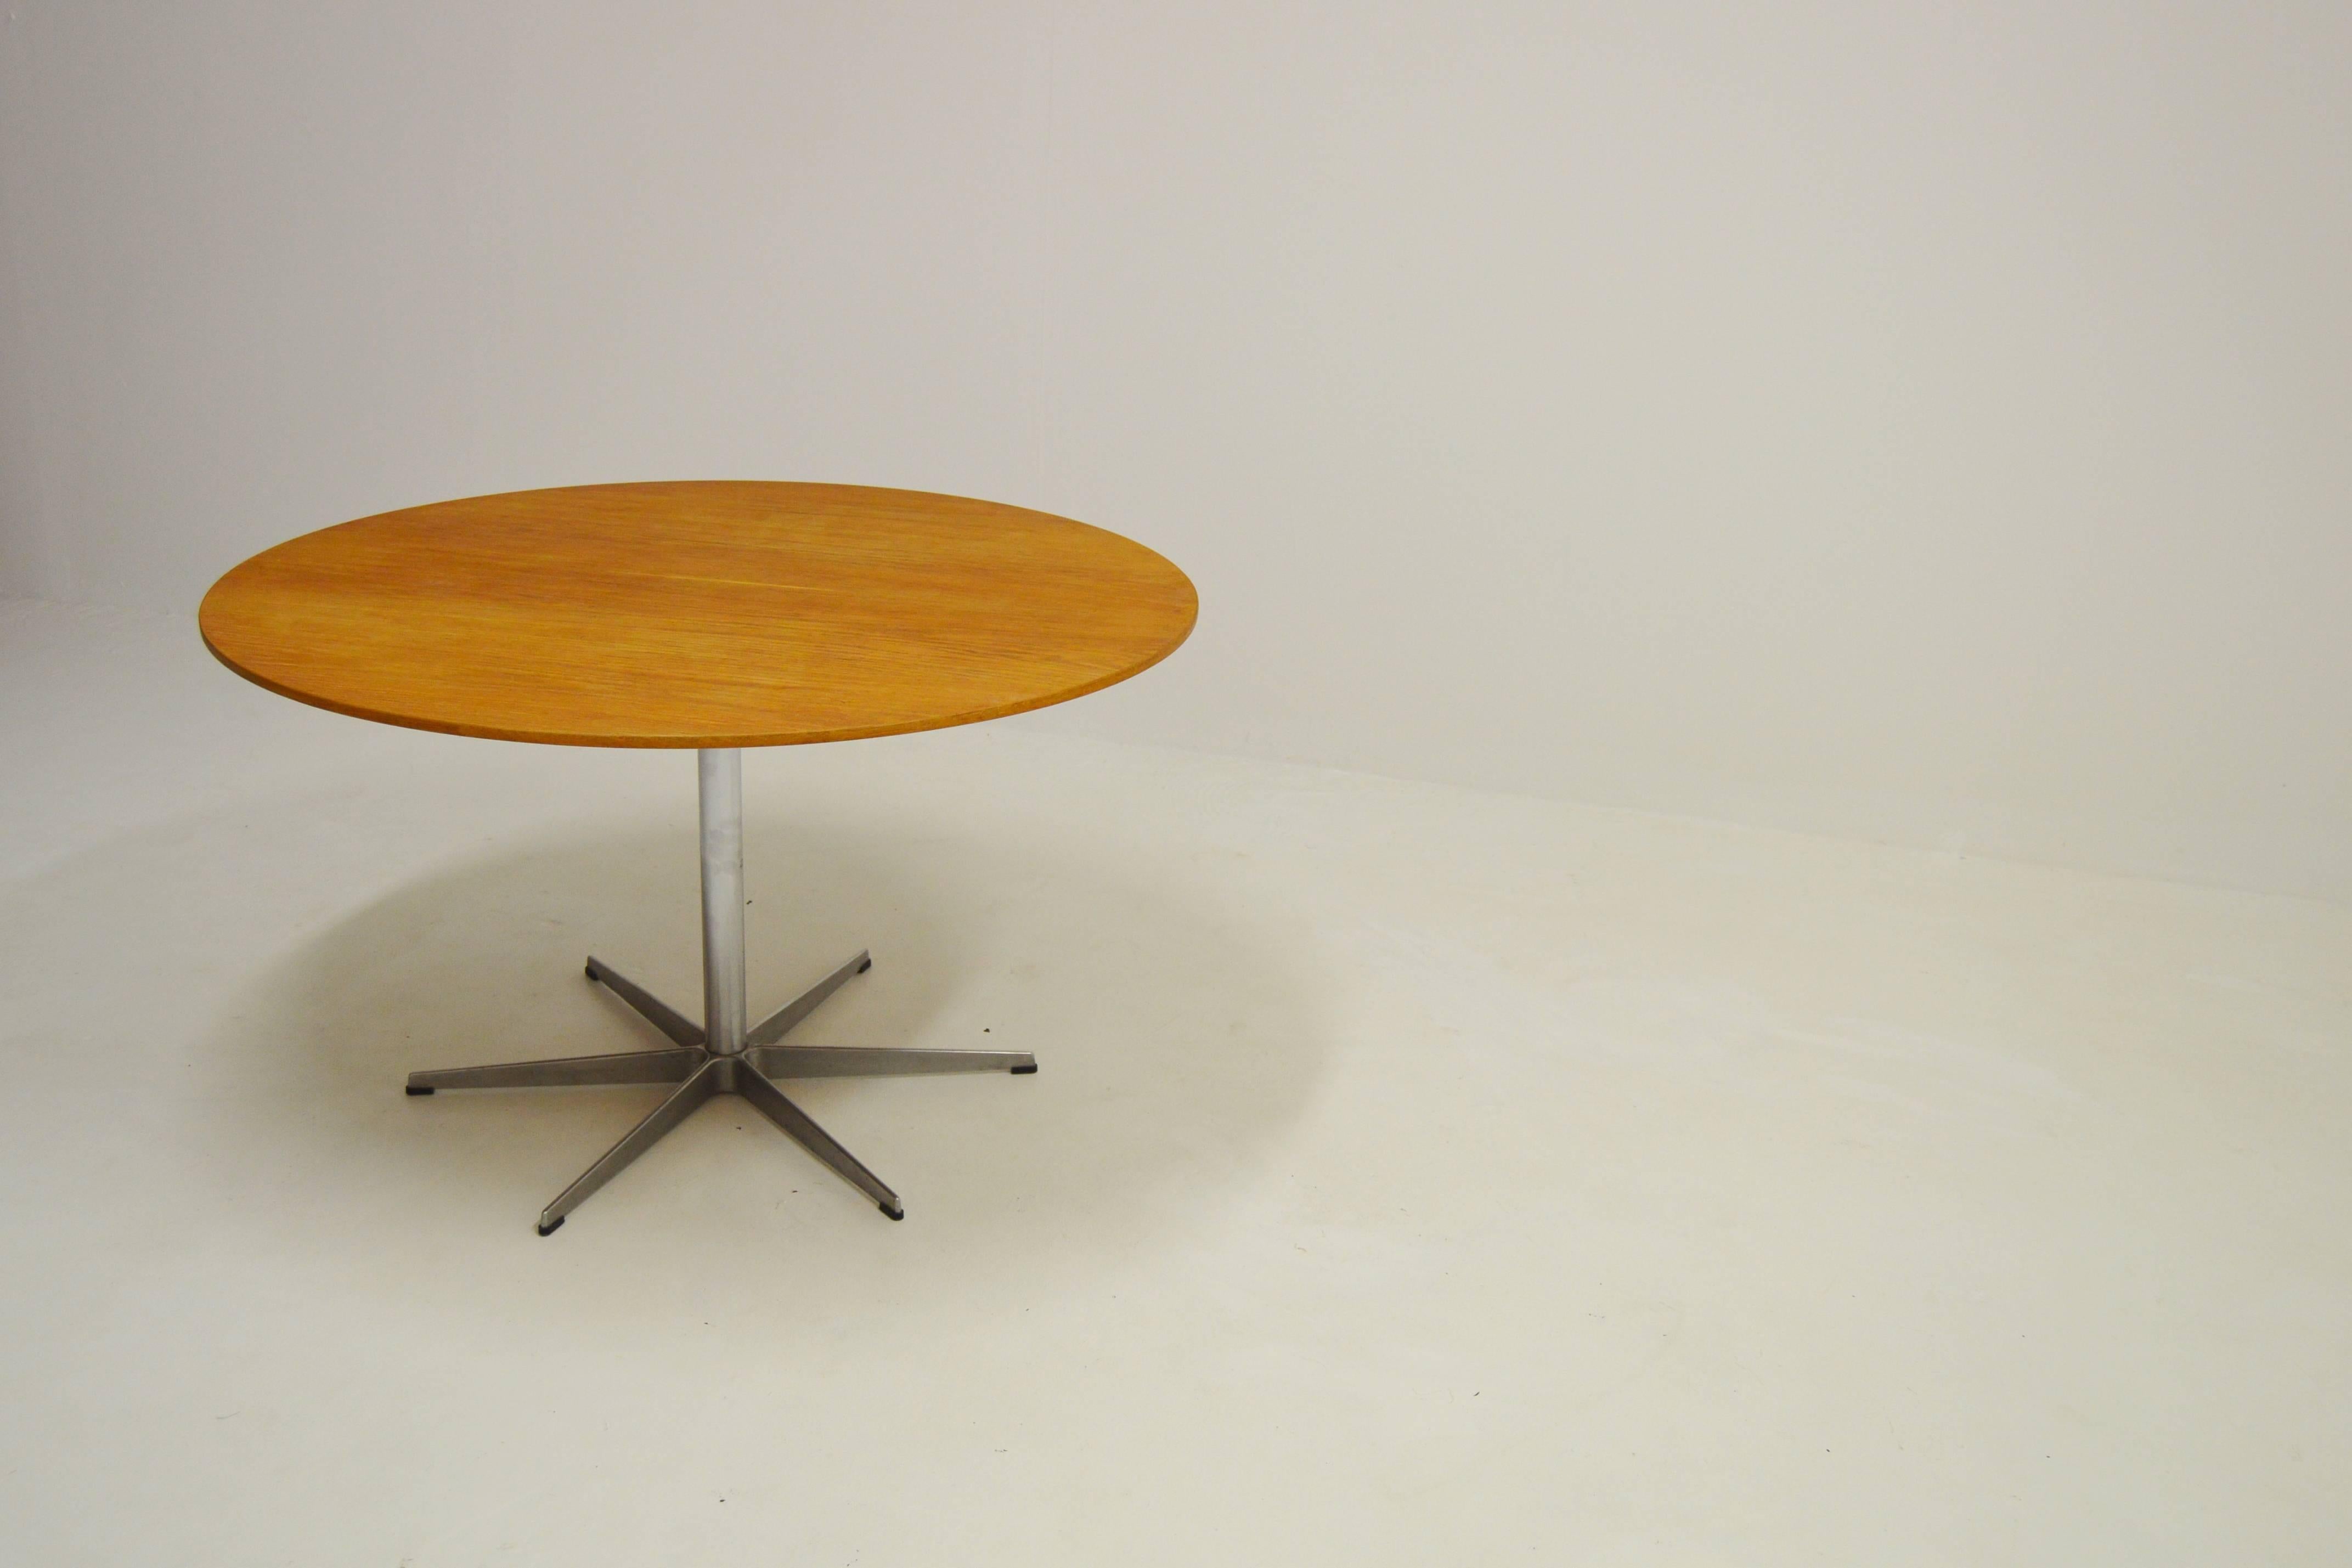 A825 Circular Oak Six Star Table by Arne Jacobsen for Fritz Hansen In Good Condition For Sale In Alvesta, SE